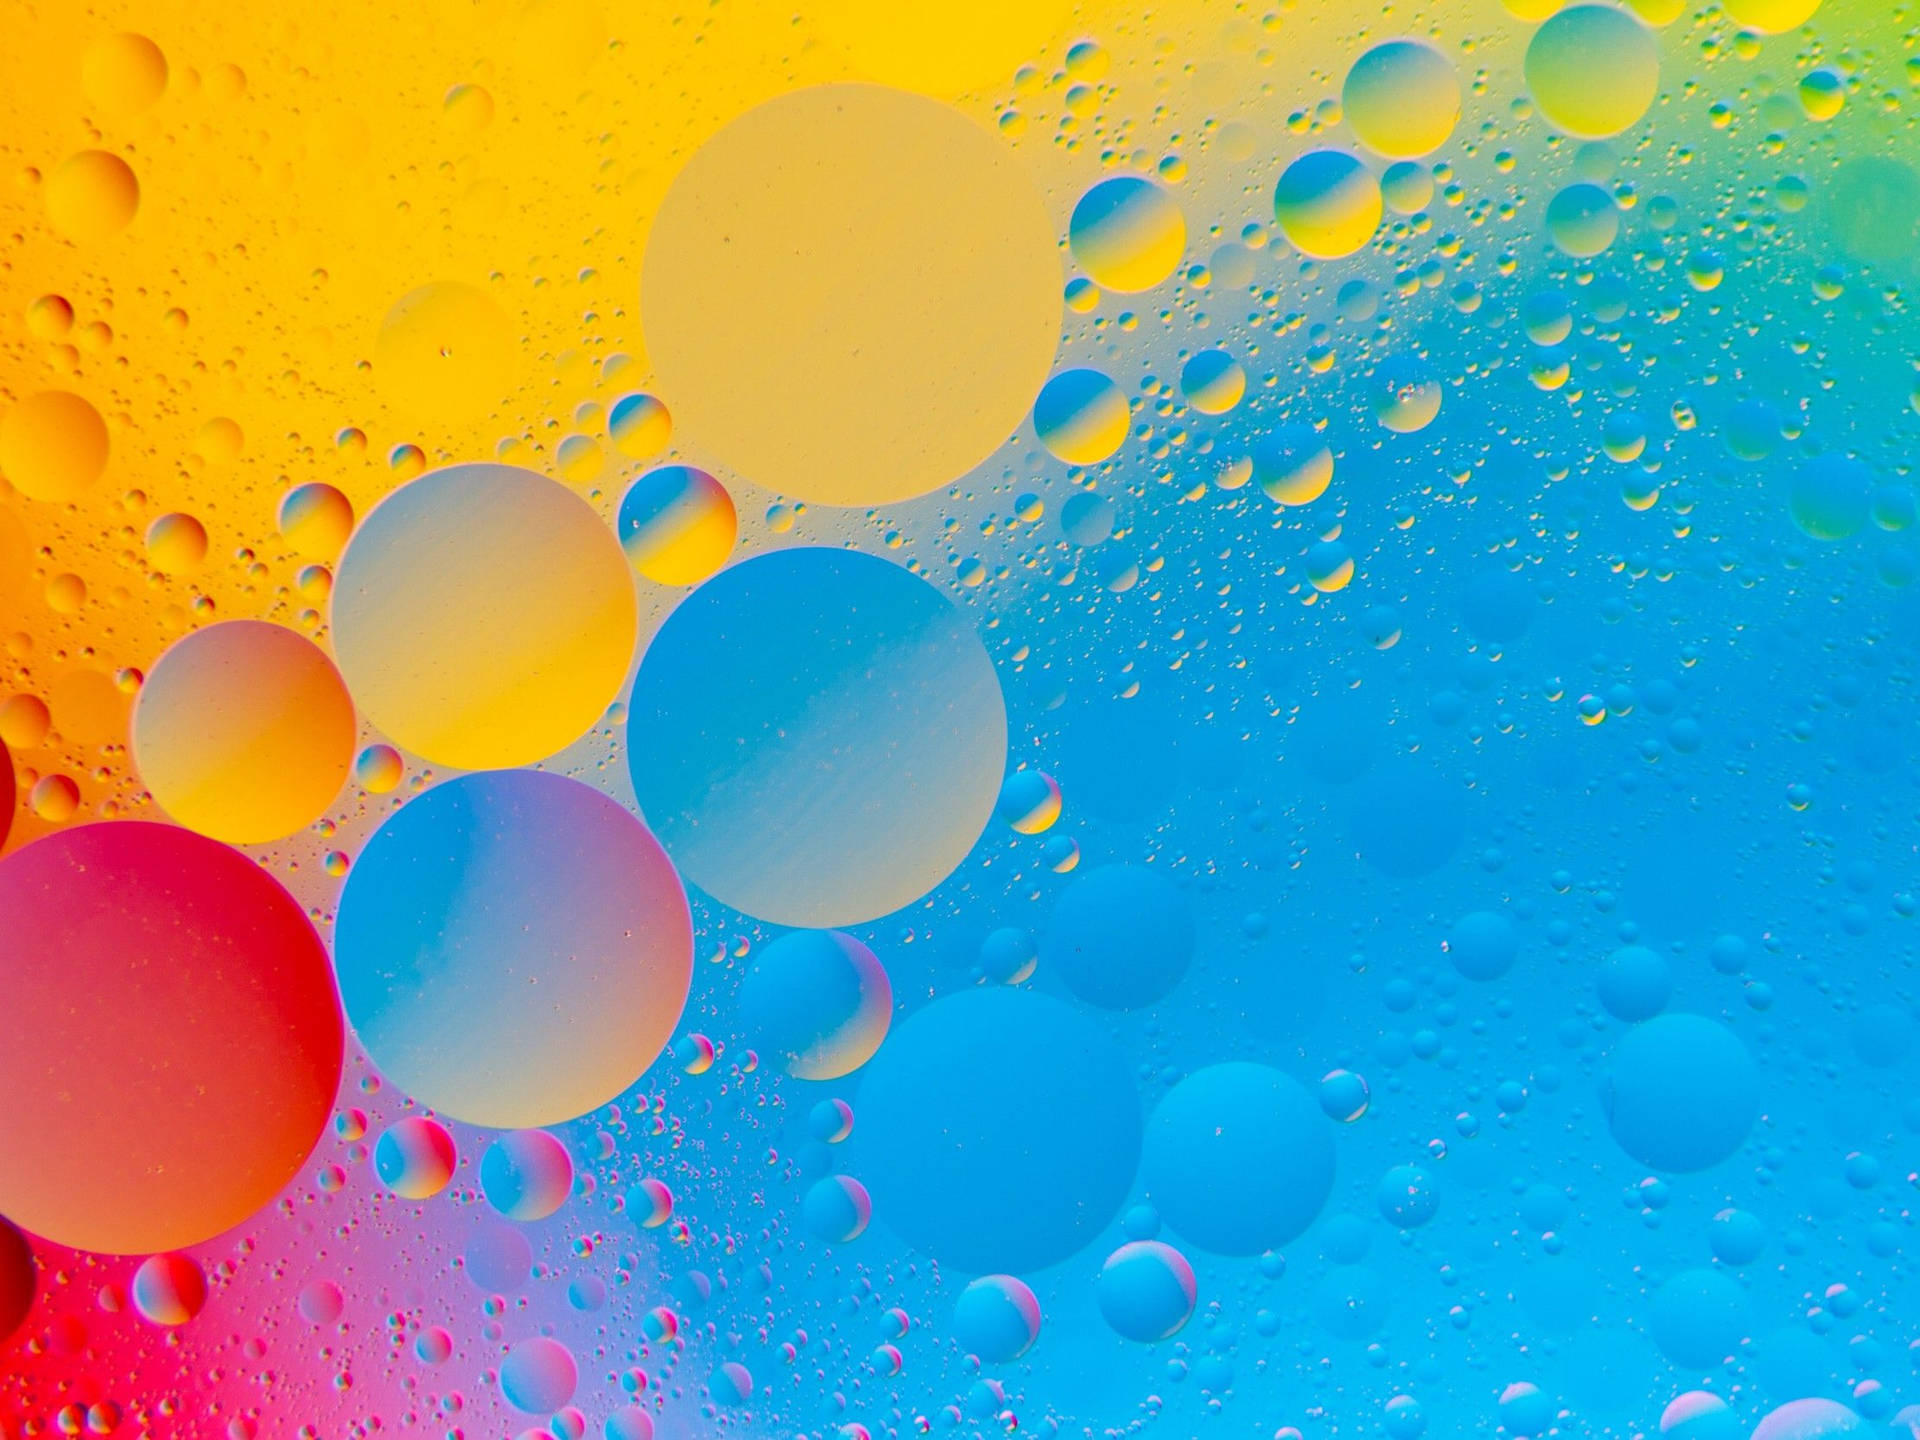 Ipad Pro Colorful Bubbles Wallpaper